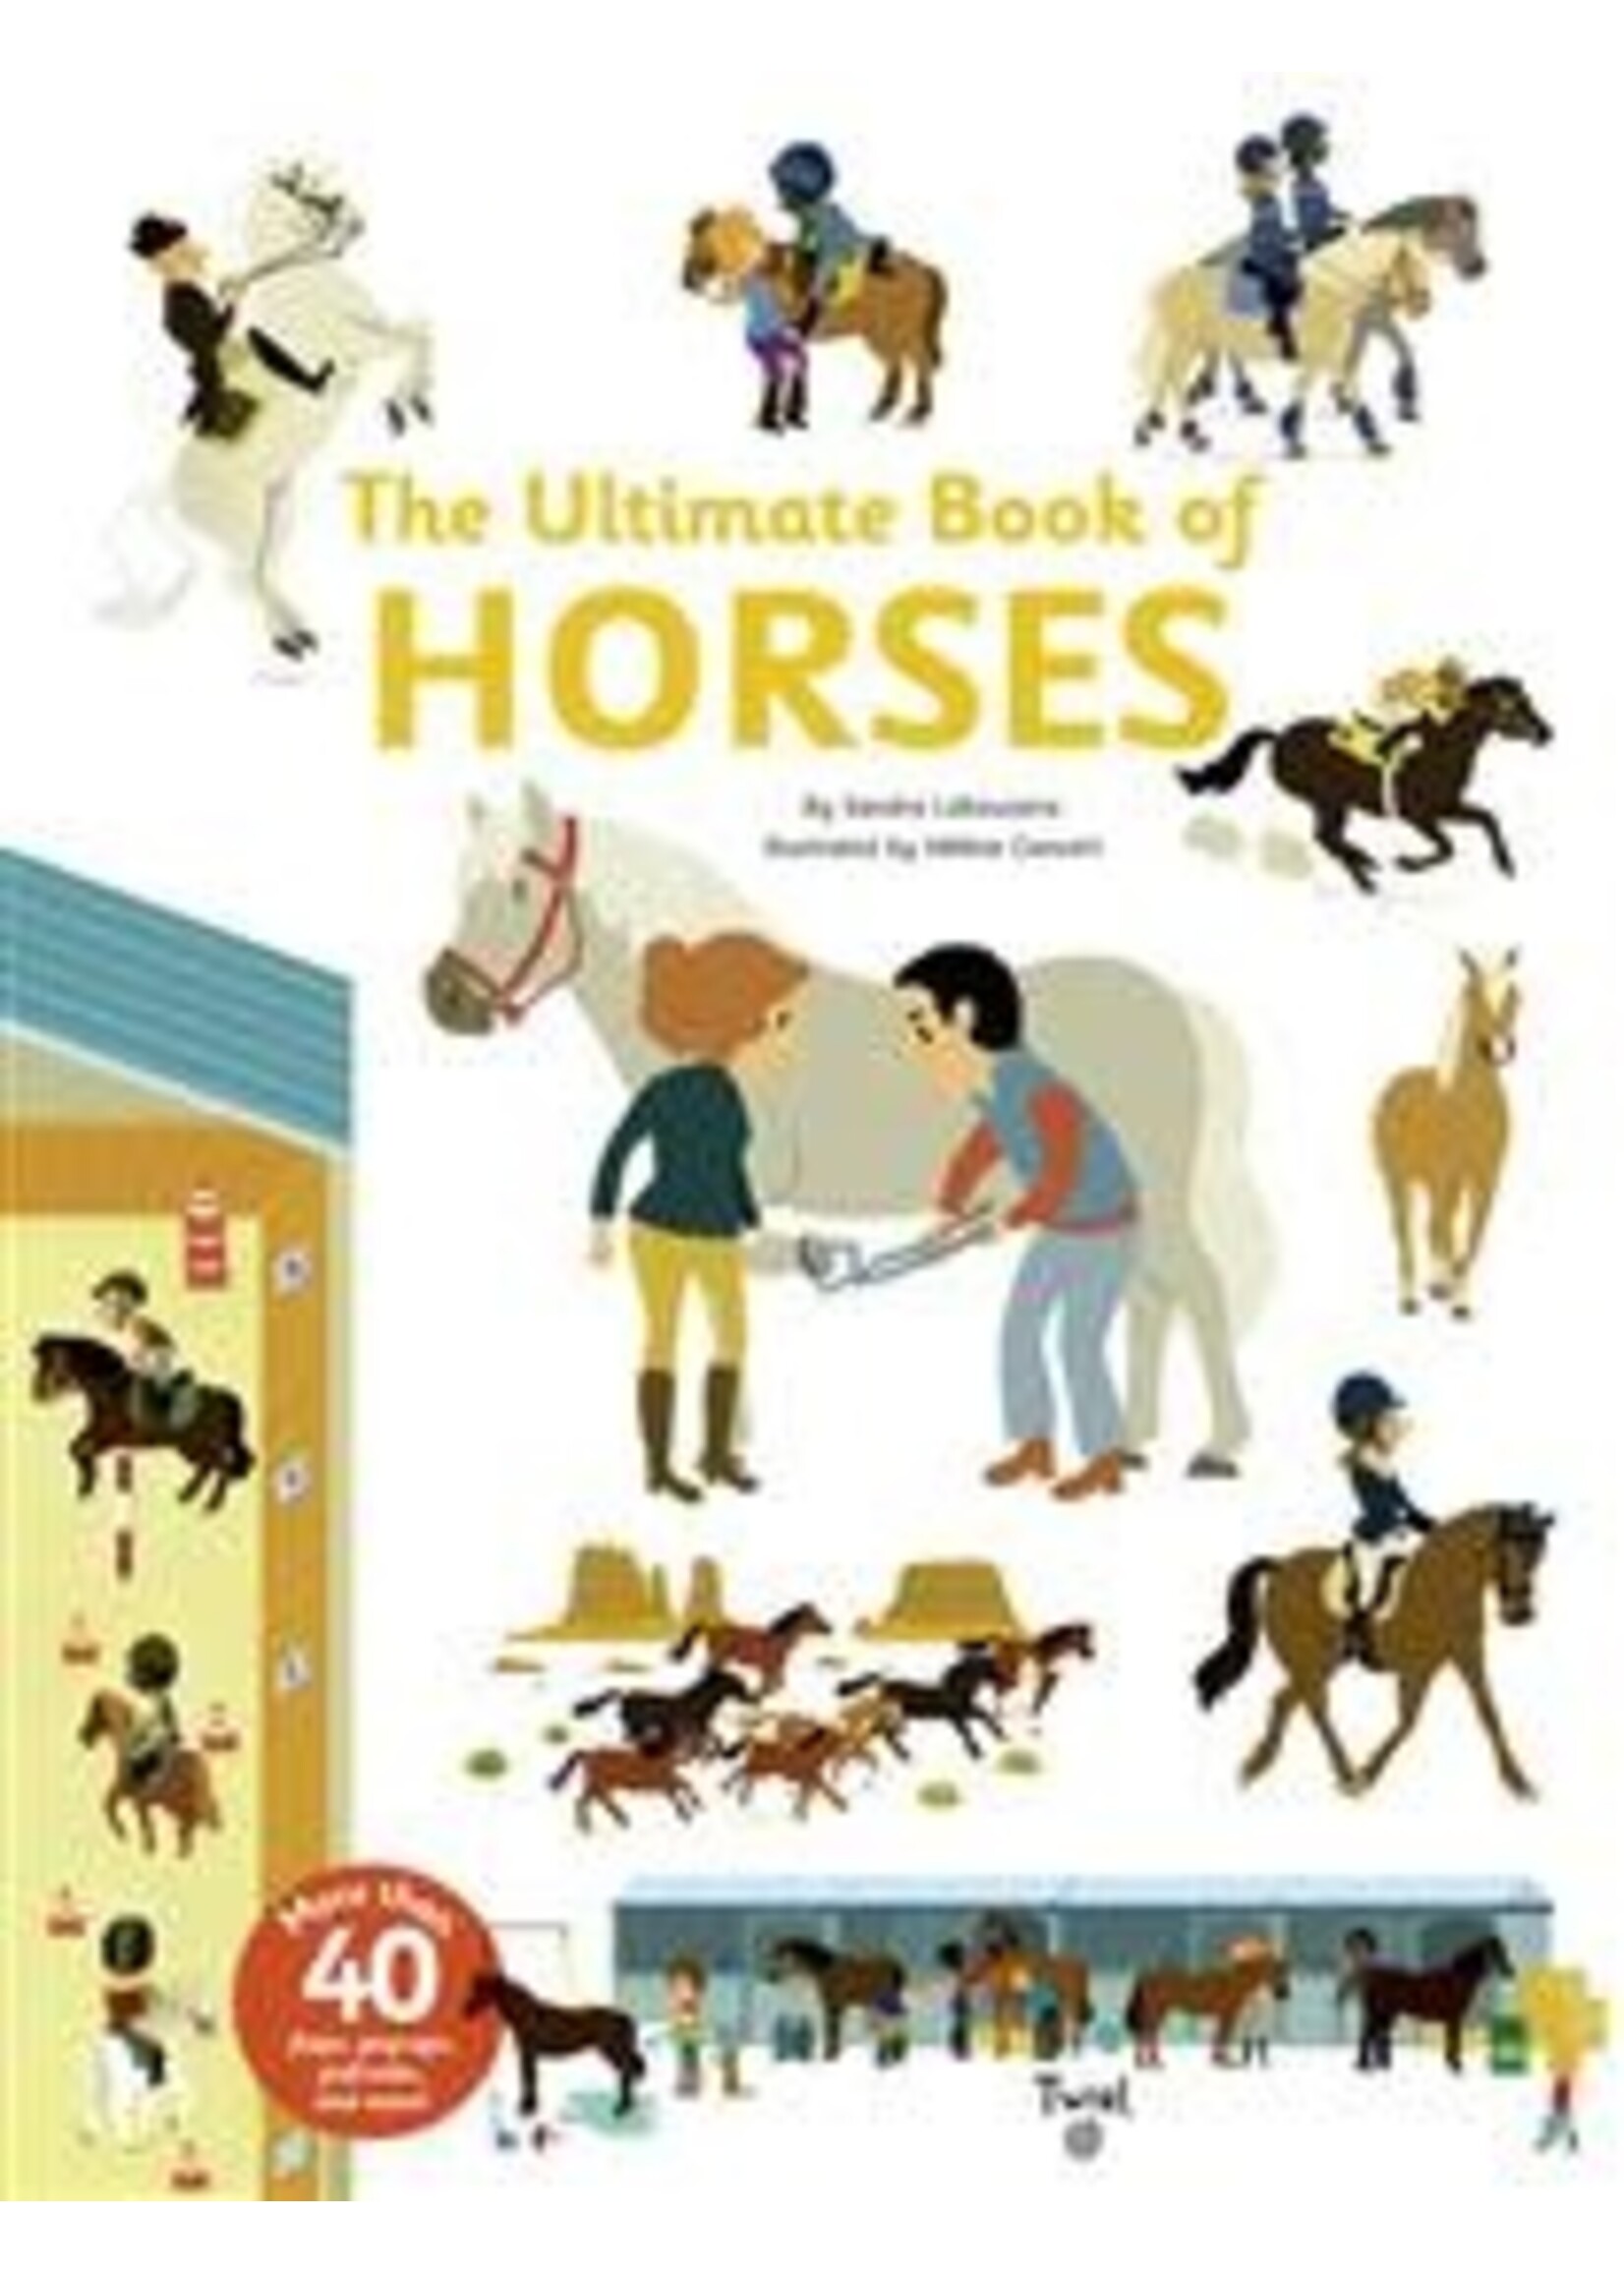 The Ultimate Book of Horses by Sandra Laboucarie, Helene Convert